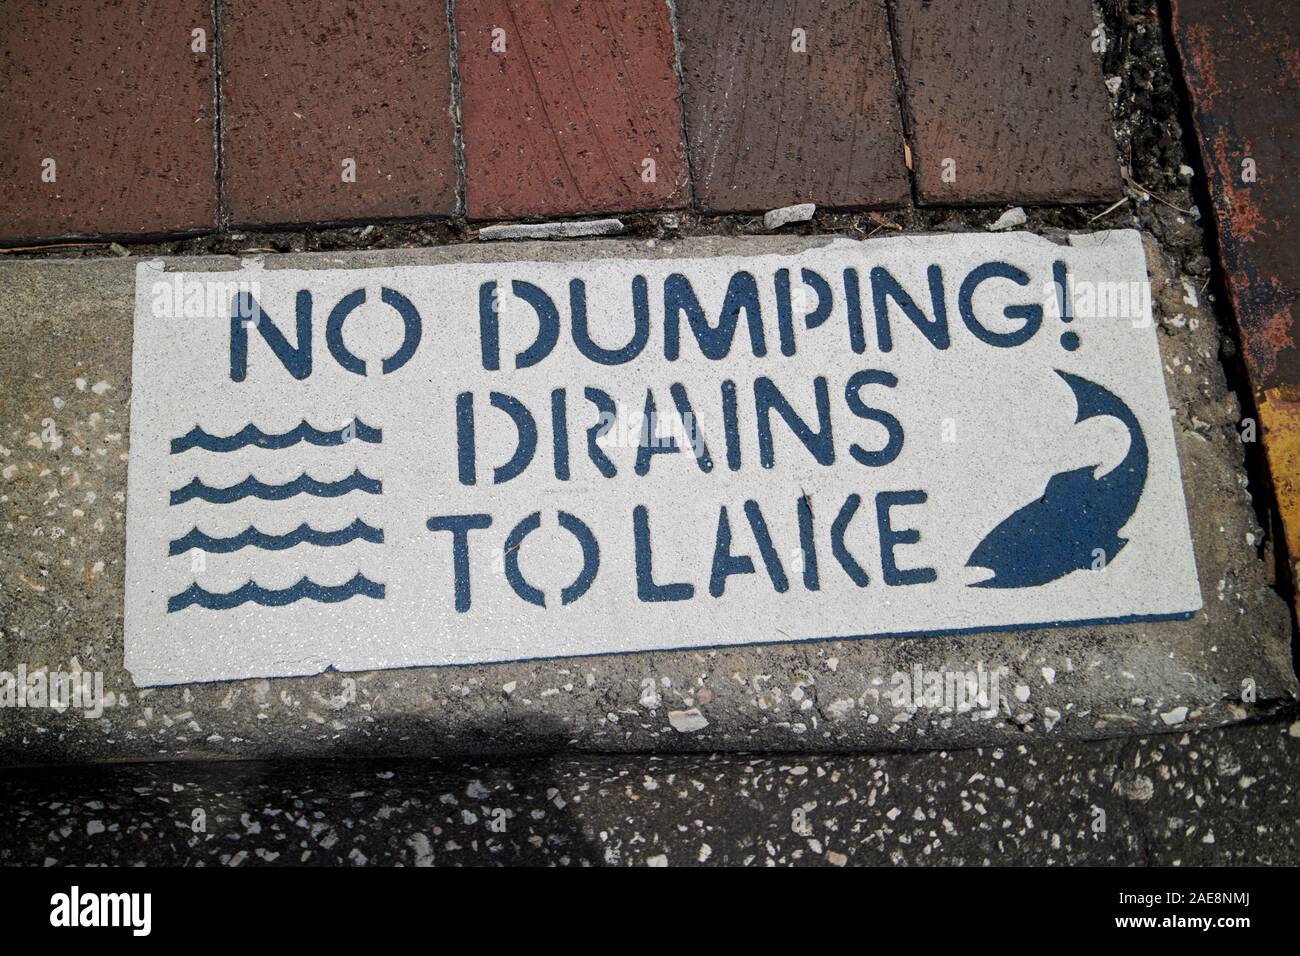 rainwater drain with no dumping drains to lake sign on sidewalk kissimmee florida usa Stock Photo